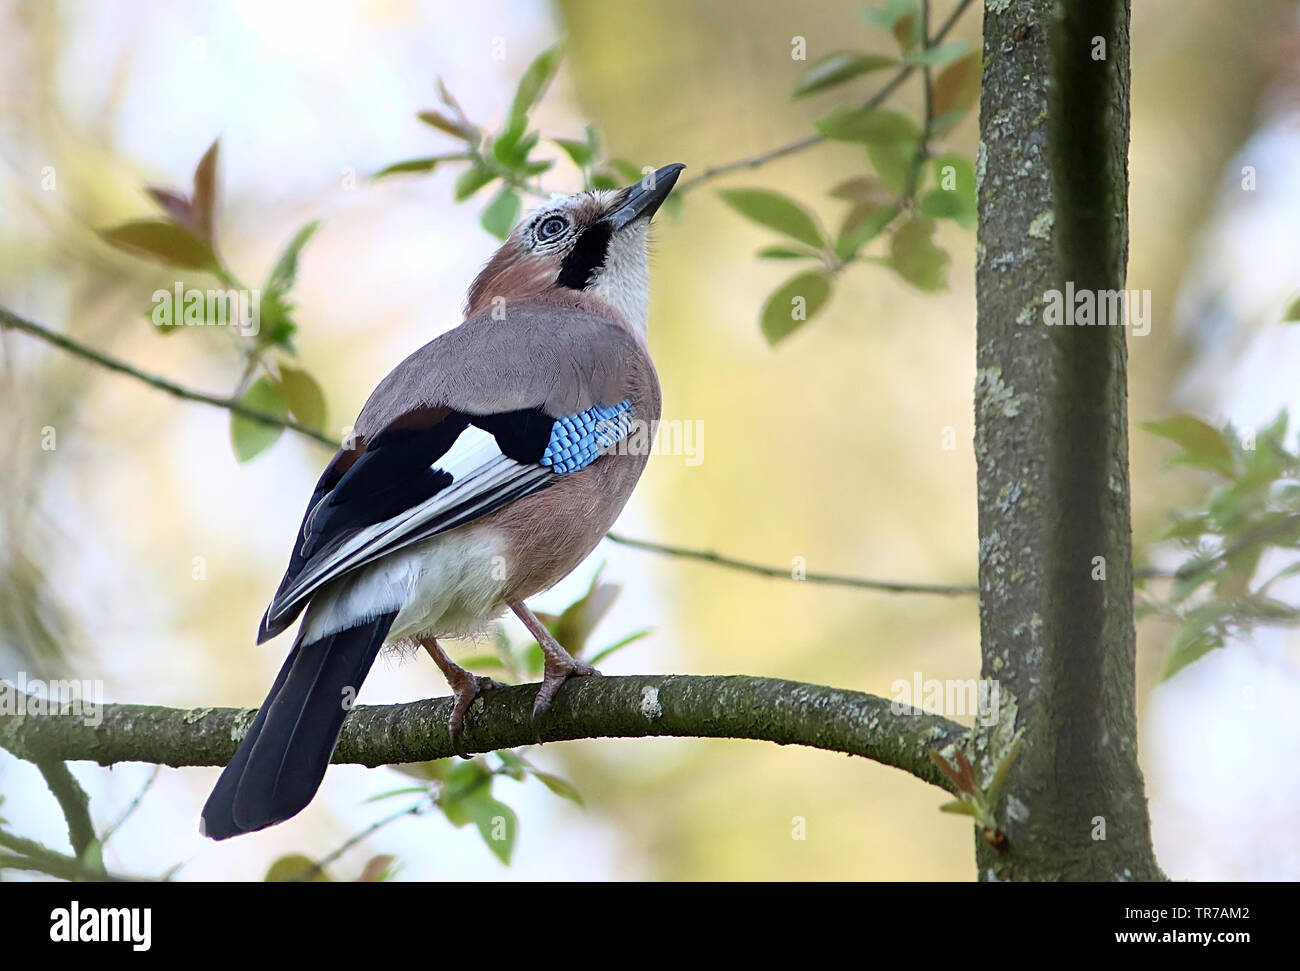 Jay euroasiático (Garrulus glandarius) posando en una rama visto de perfil Foto de stock